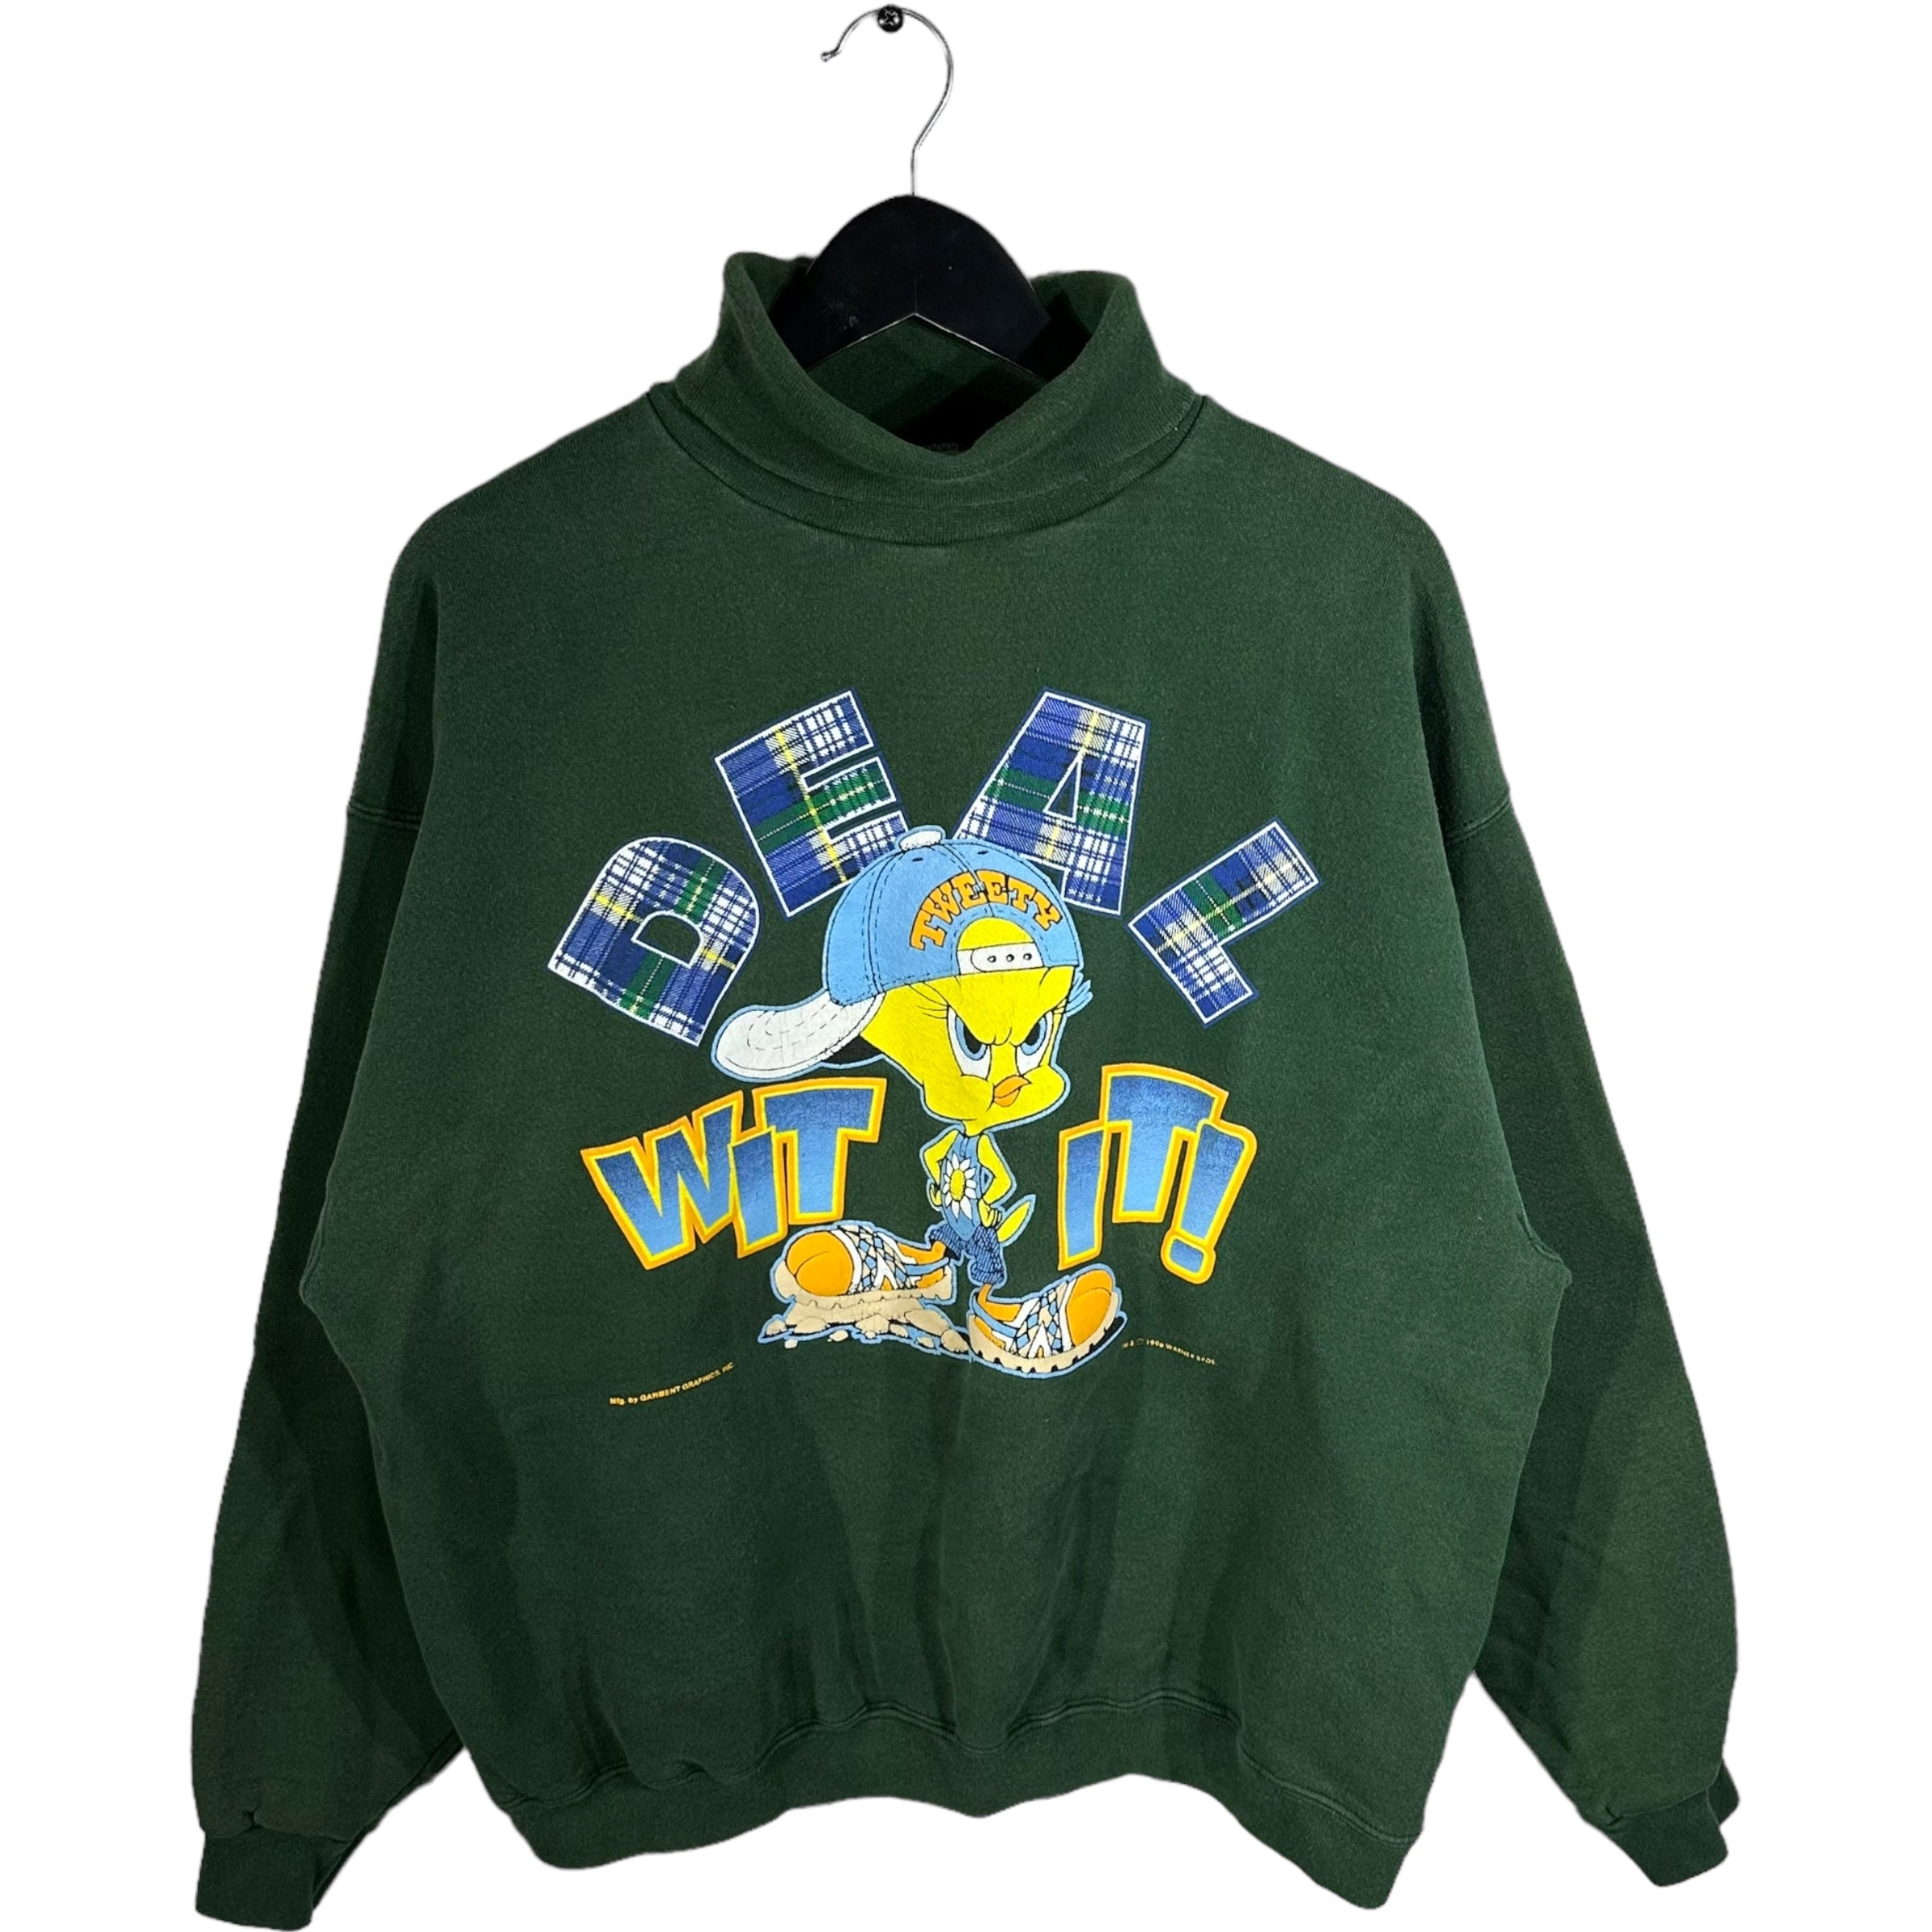 Vintage "Deal With It" Tweety Bird Turtle Neck Sweatshirt 1996